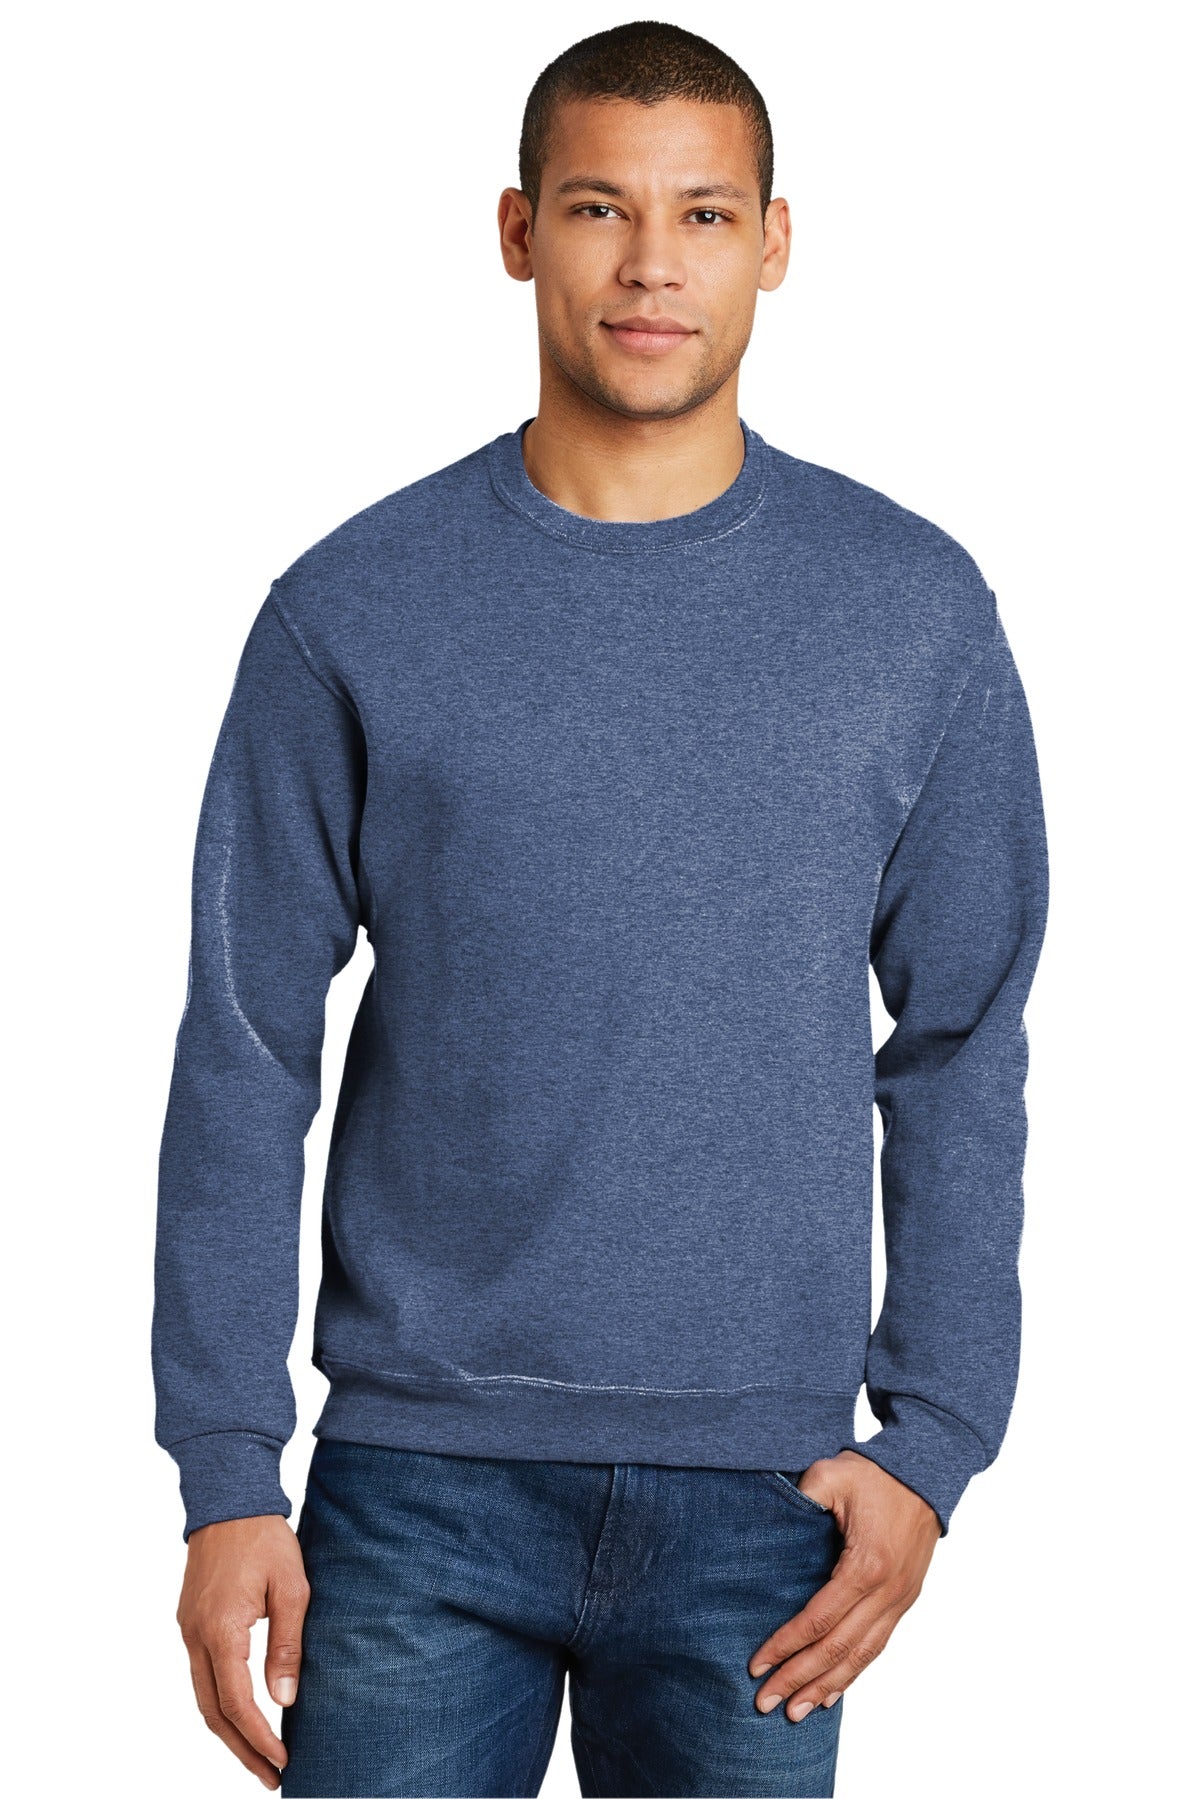 JERZEES® - NuBlend® Crewneck Sweatshirt. 562M [Vintage Heather Blue] - DFW Impression